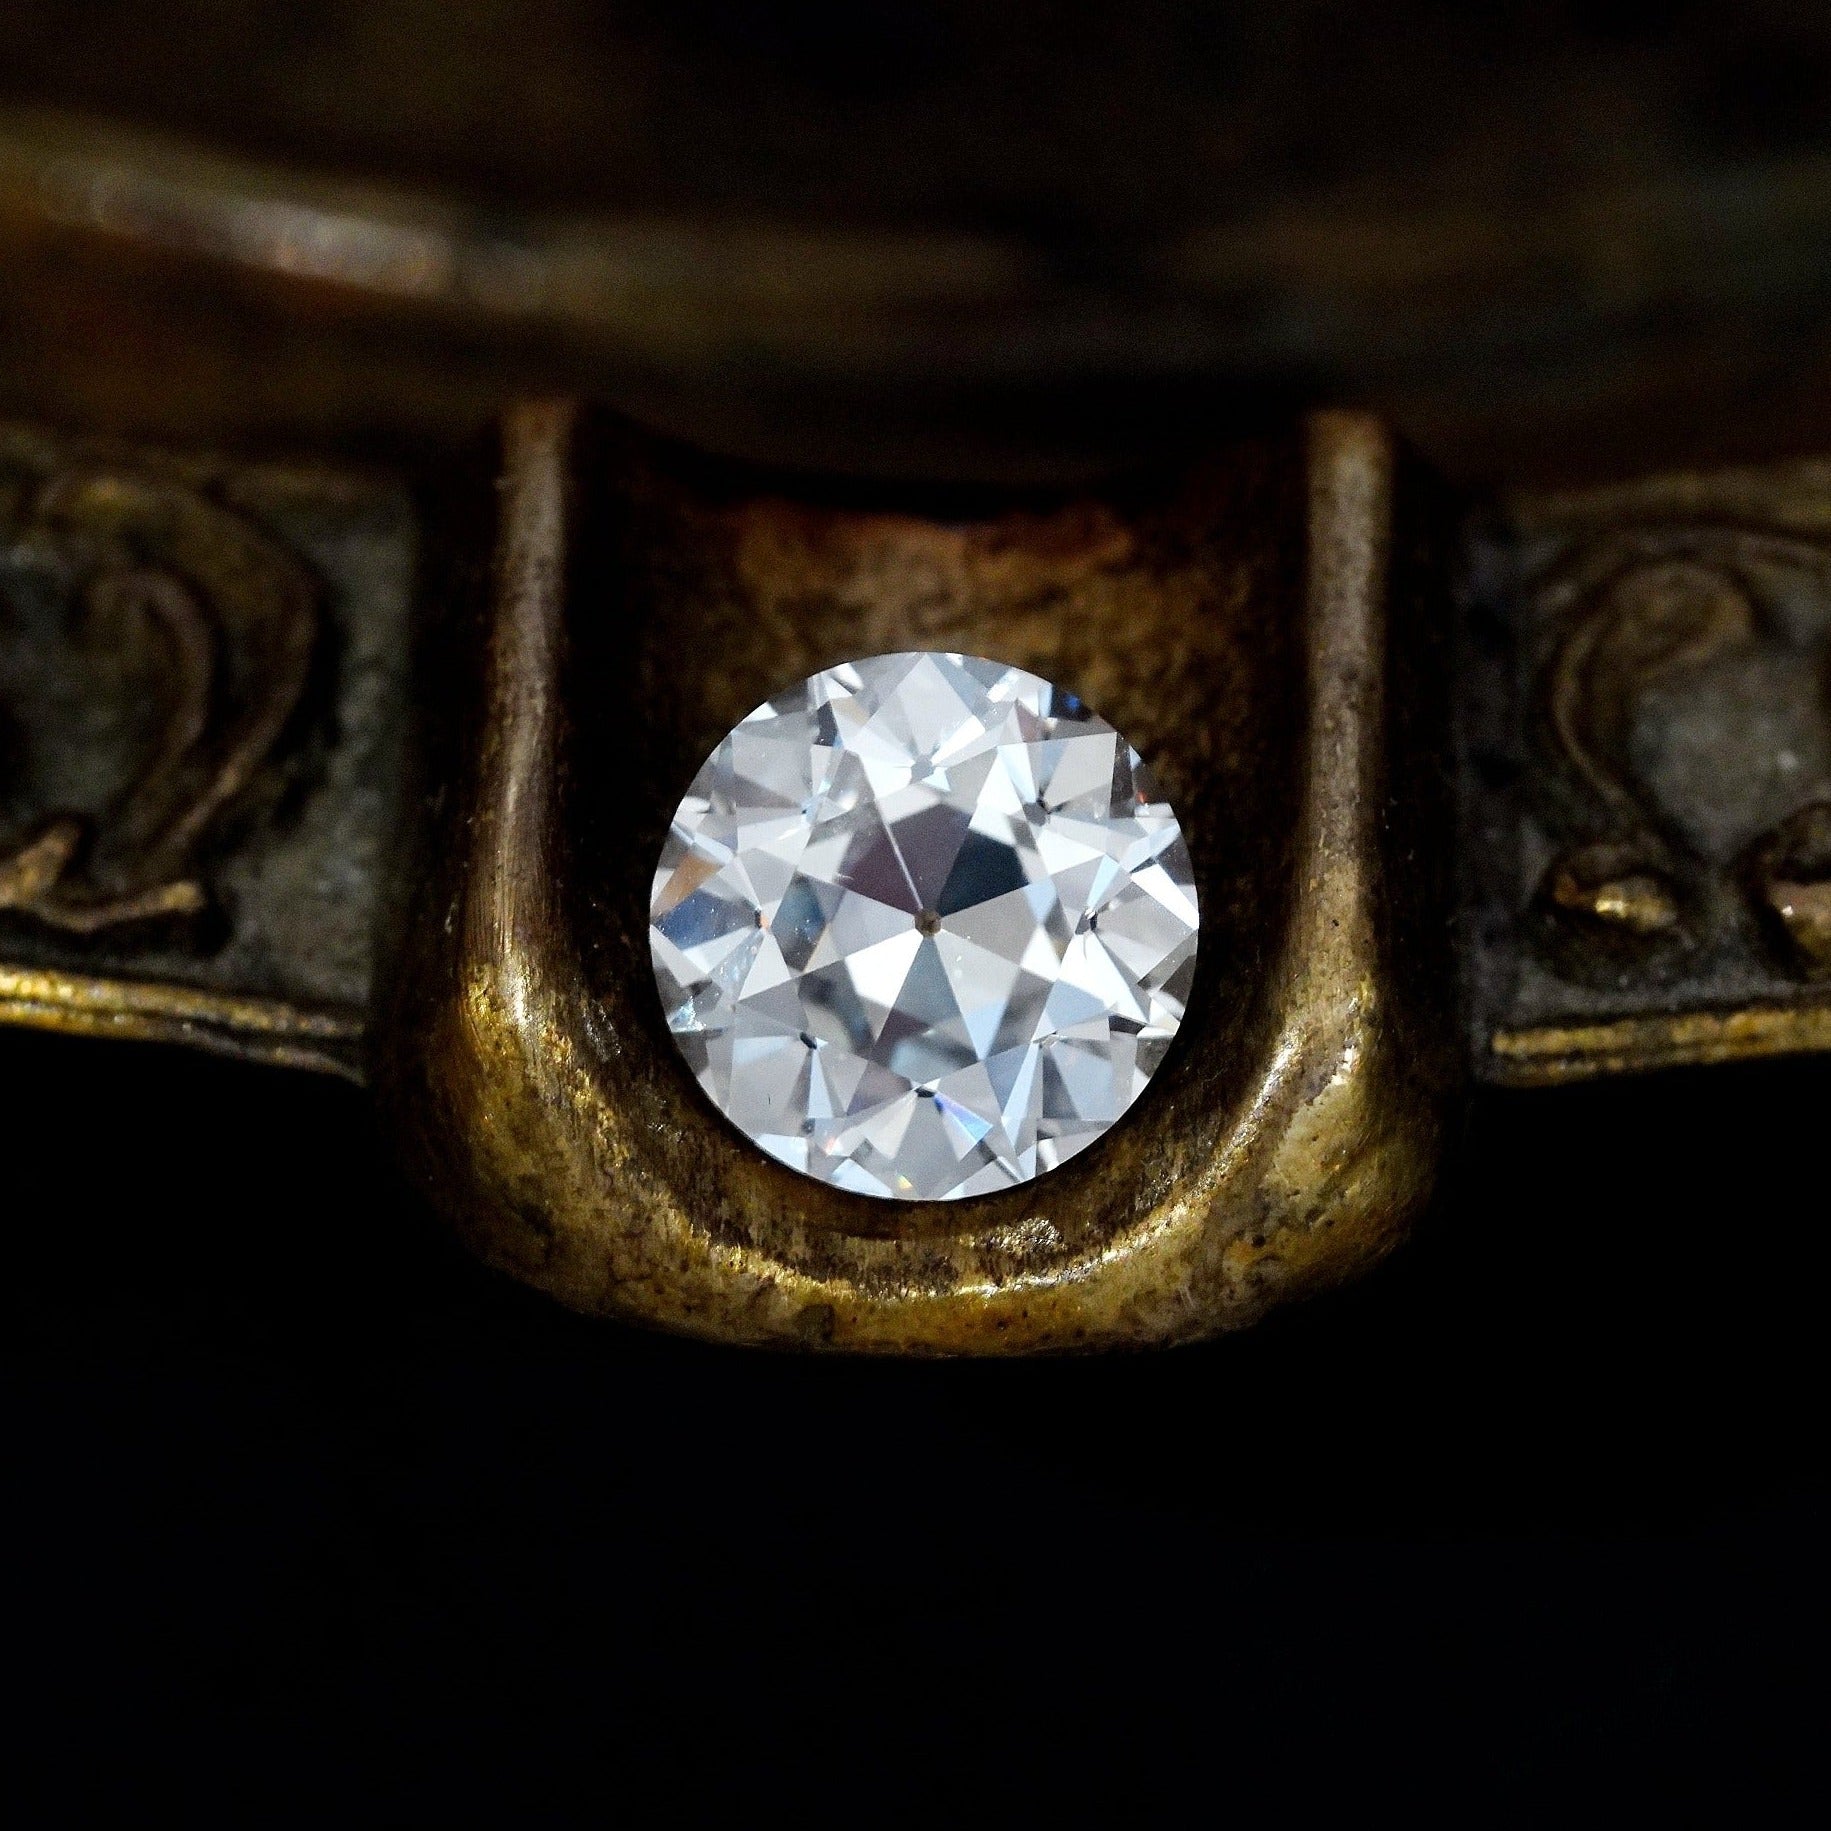 Glorious 5.02-CT Old European Cut Diamond - Art Deco Inspired Brilliance